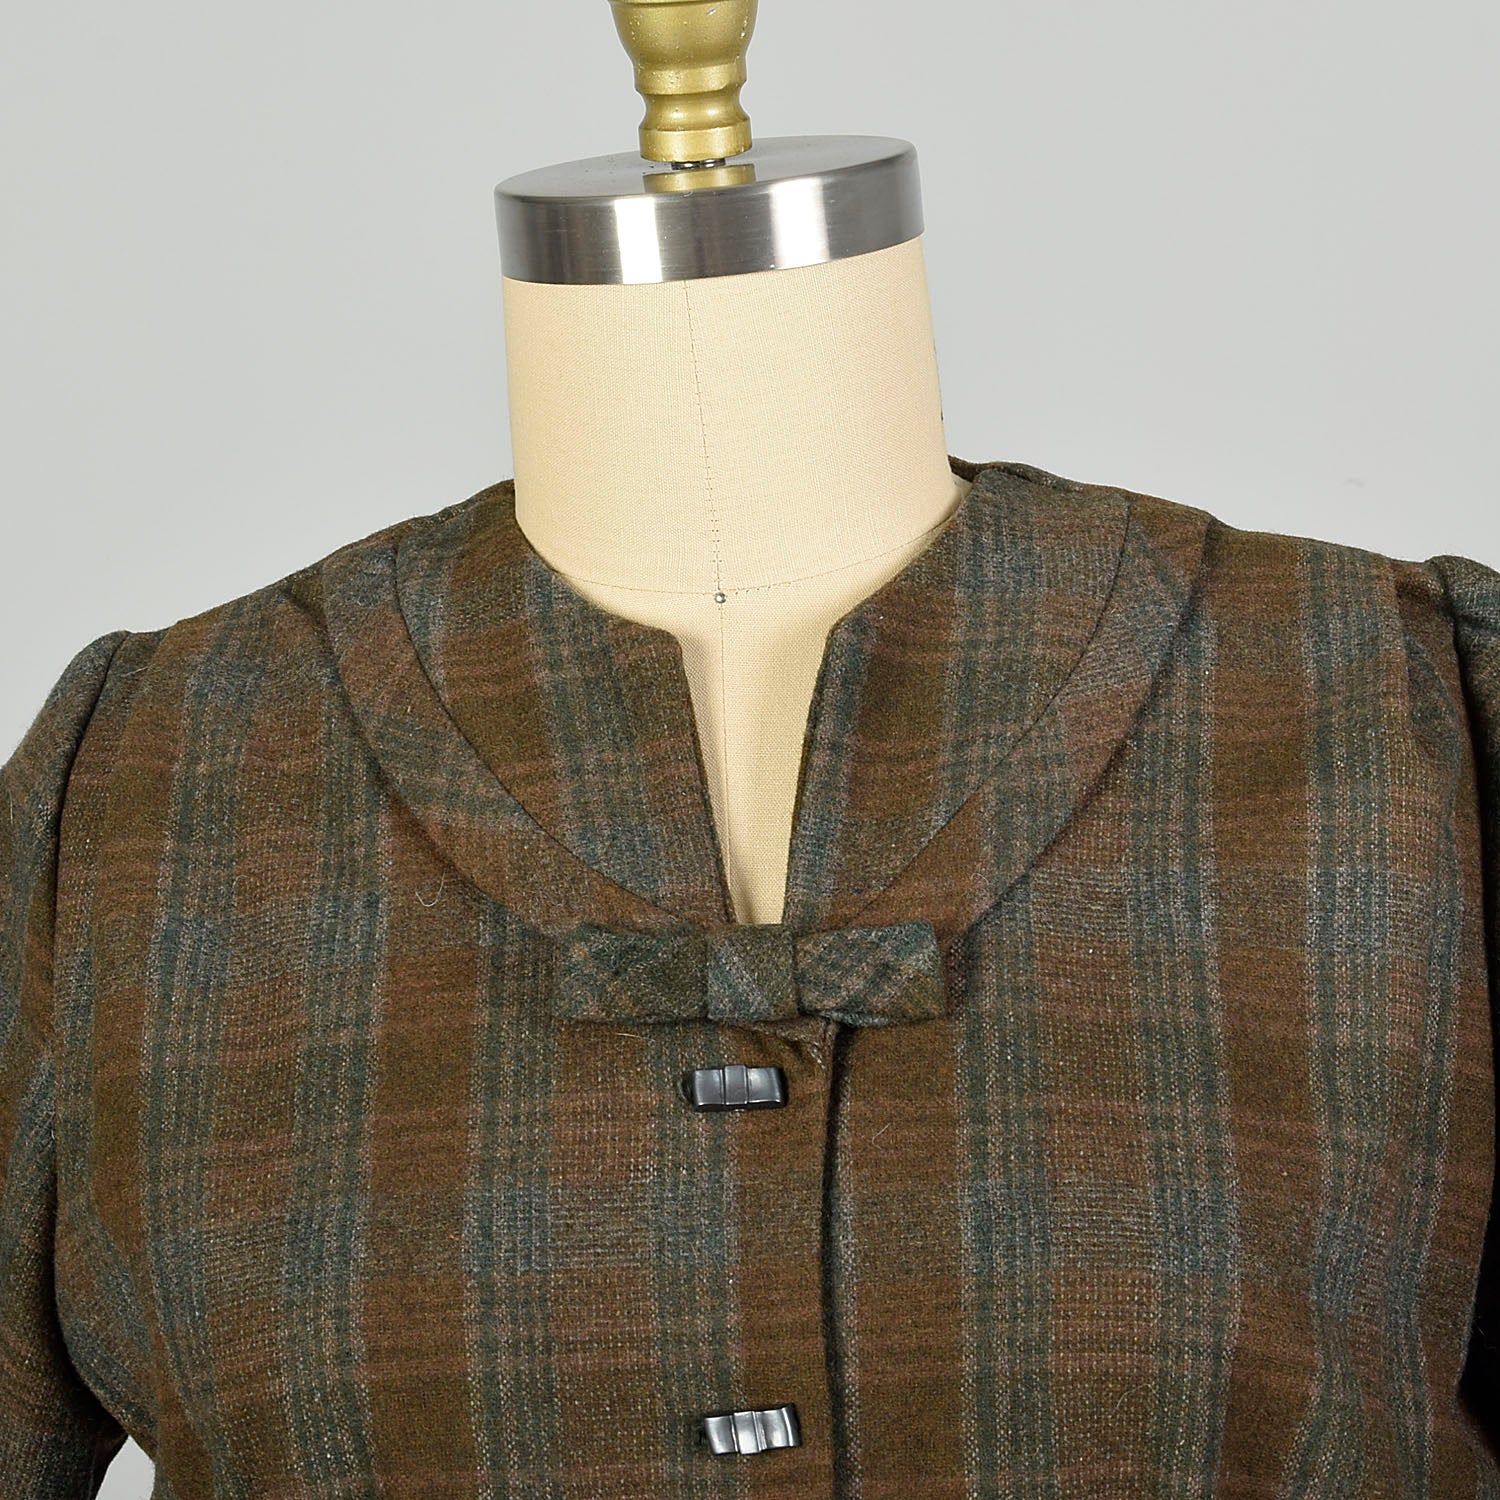 XL-XXL 1950s Wool Button-up Dress Green and Brown Plaid Button-up